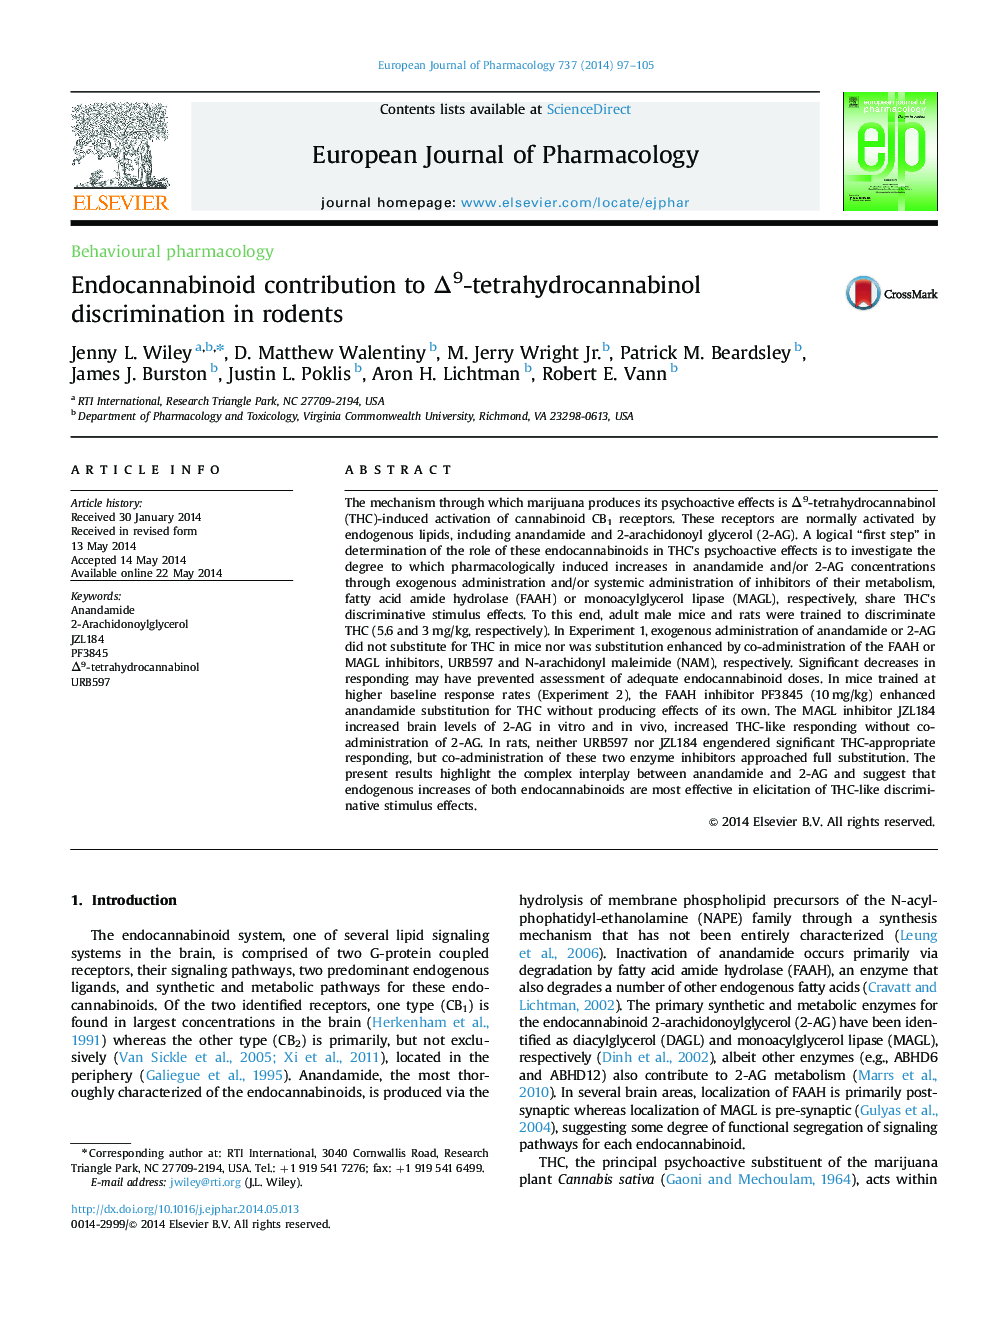 Endocannabinoid contribution to Δ9-tetrahydrocannabinol discrimination in rodents